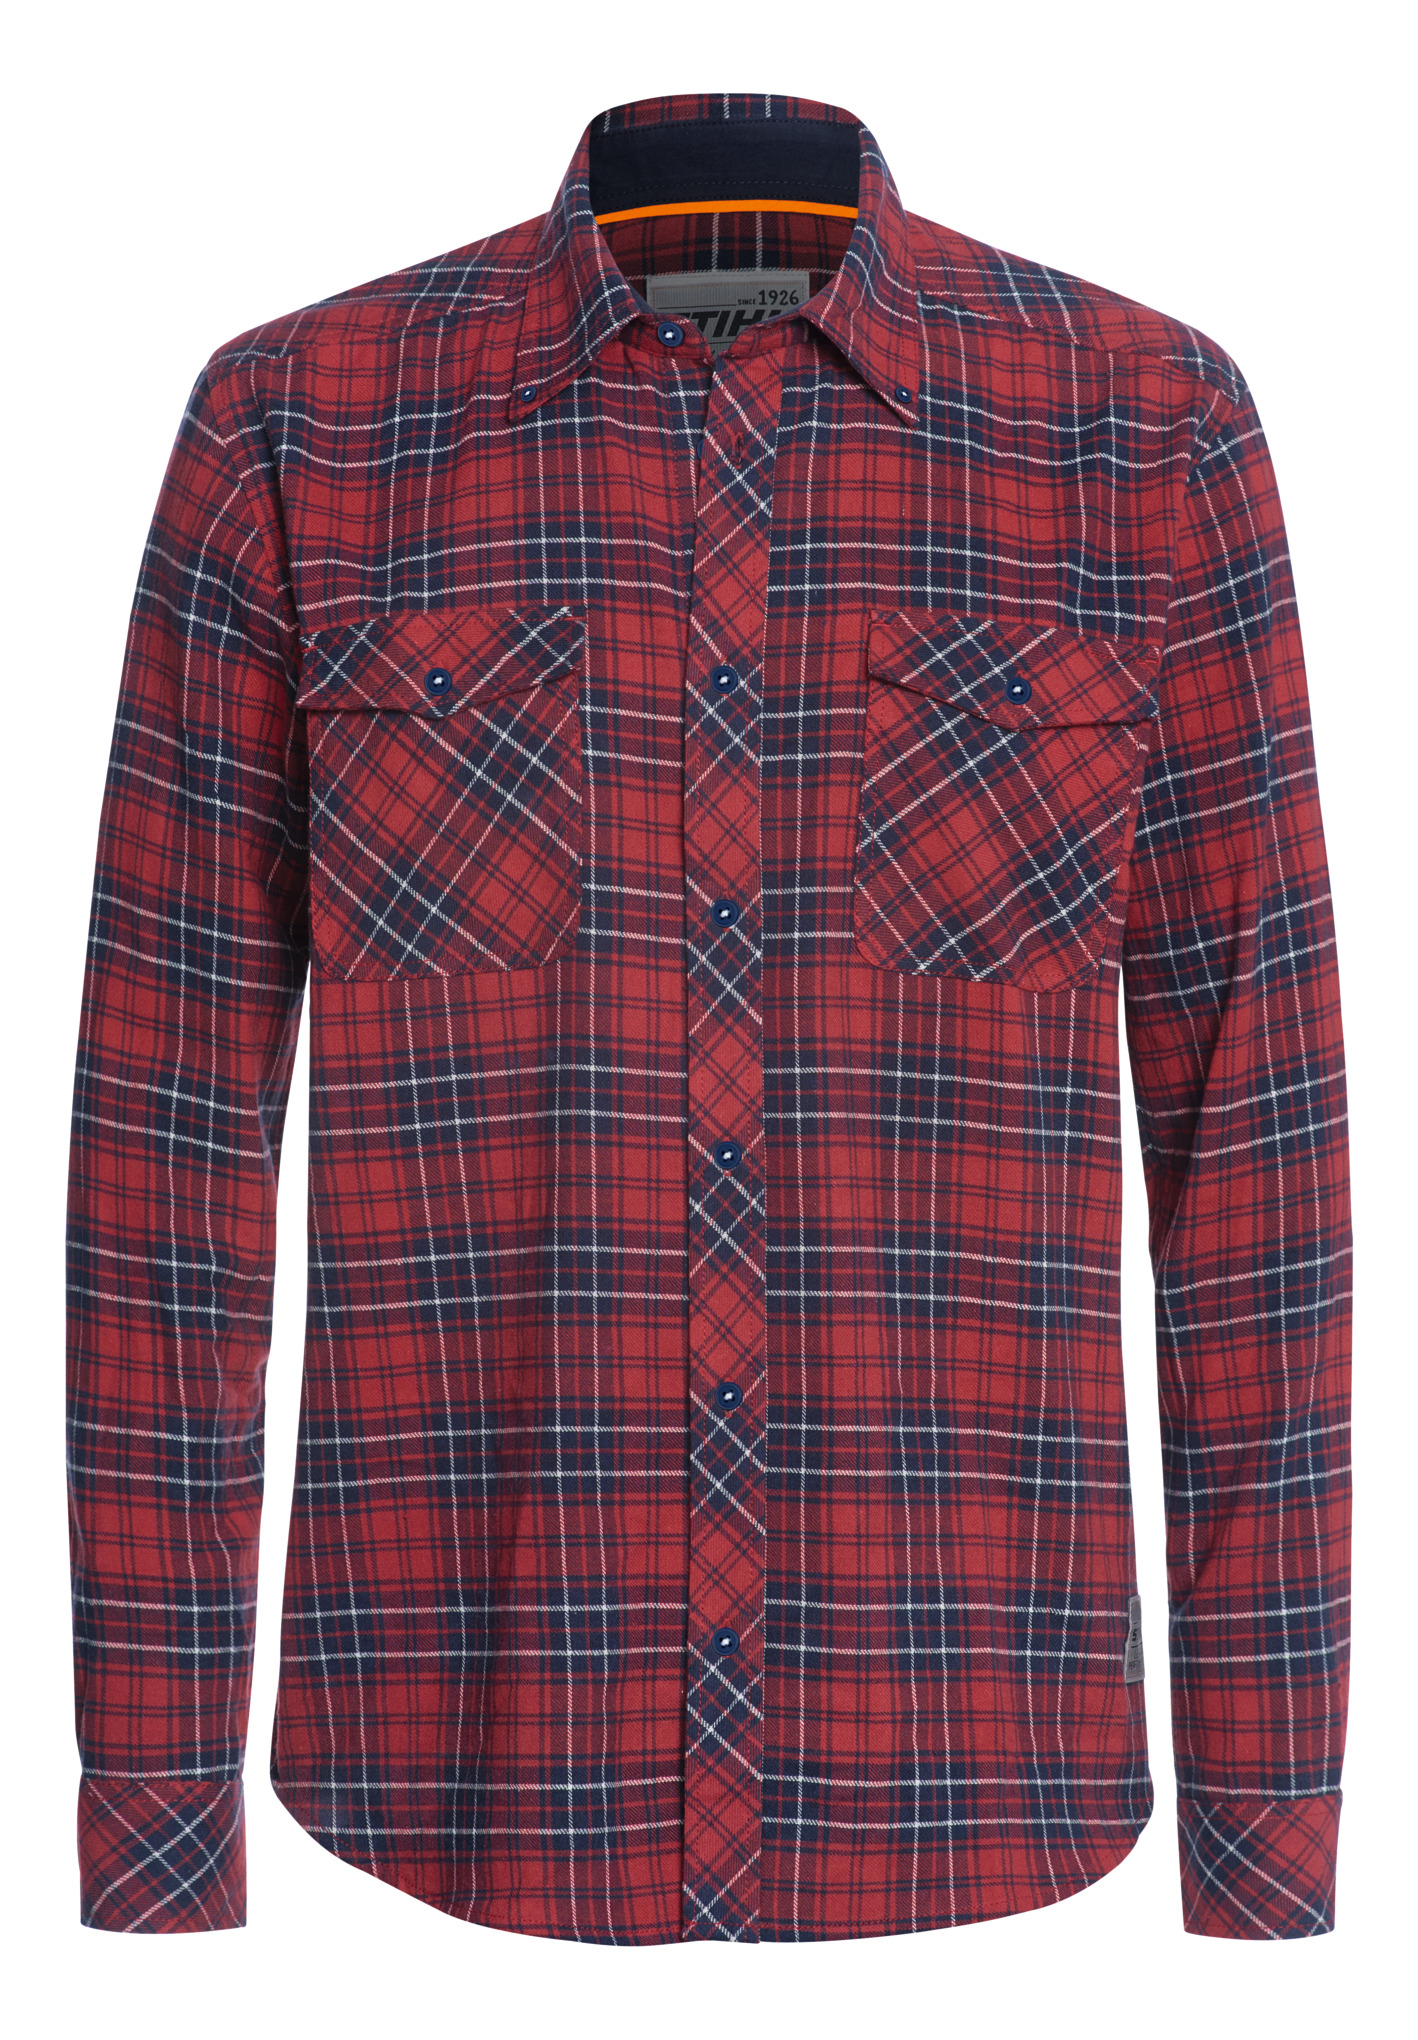 Men's flannel shirt